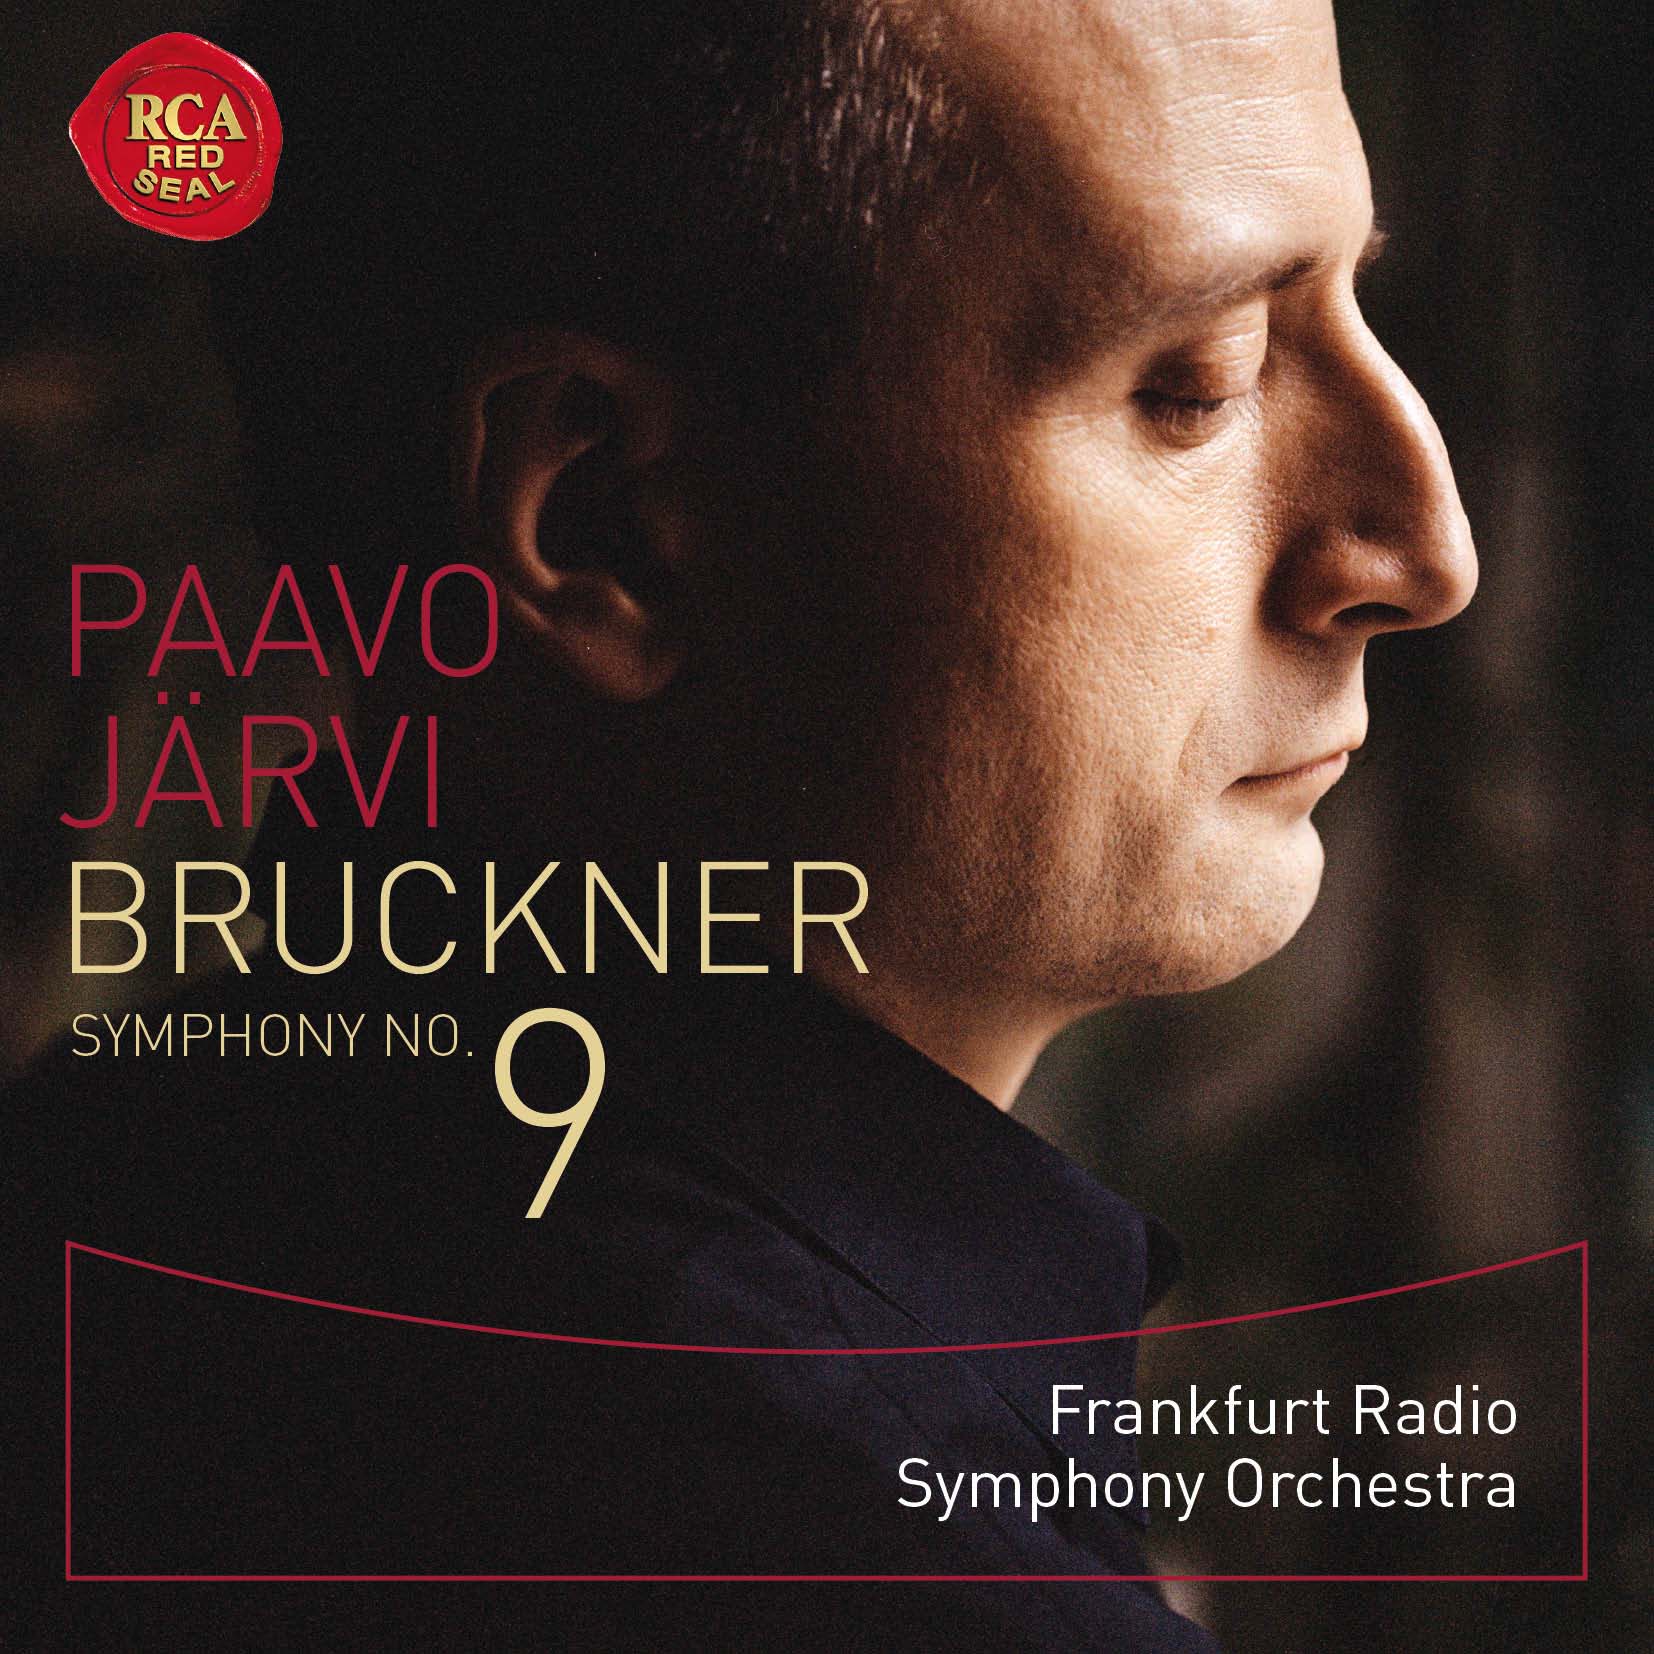 Paavo Jarvi & Frankfurt Radio Symphony Orchestra – Bruckner: Symphony No 9 (2009) MCH SACD ISO + FLAC 24bit/48kHz